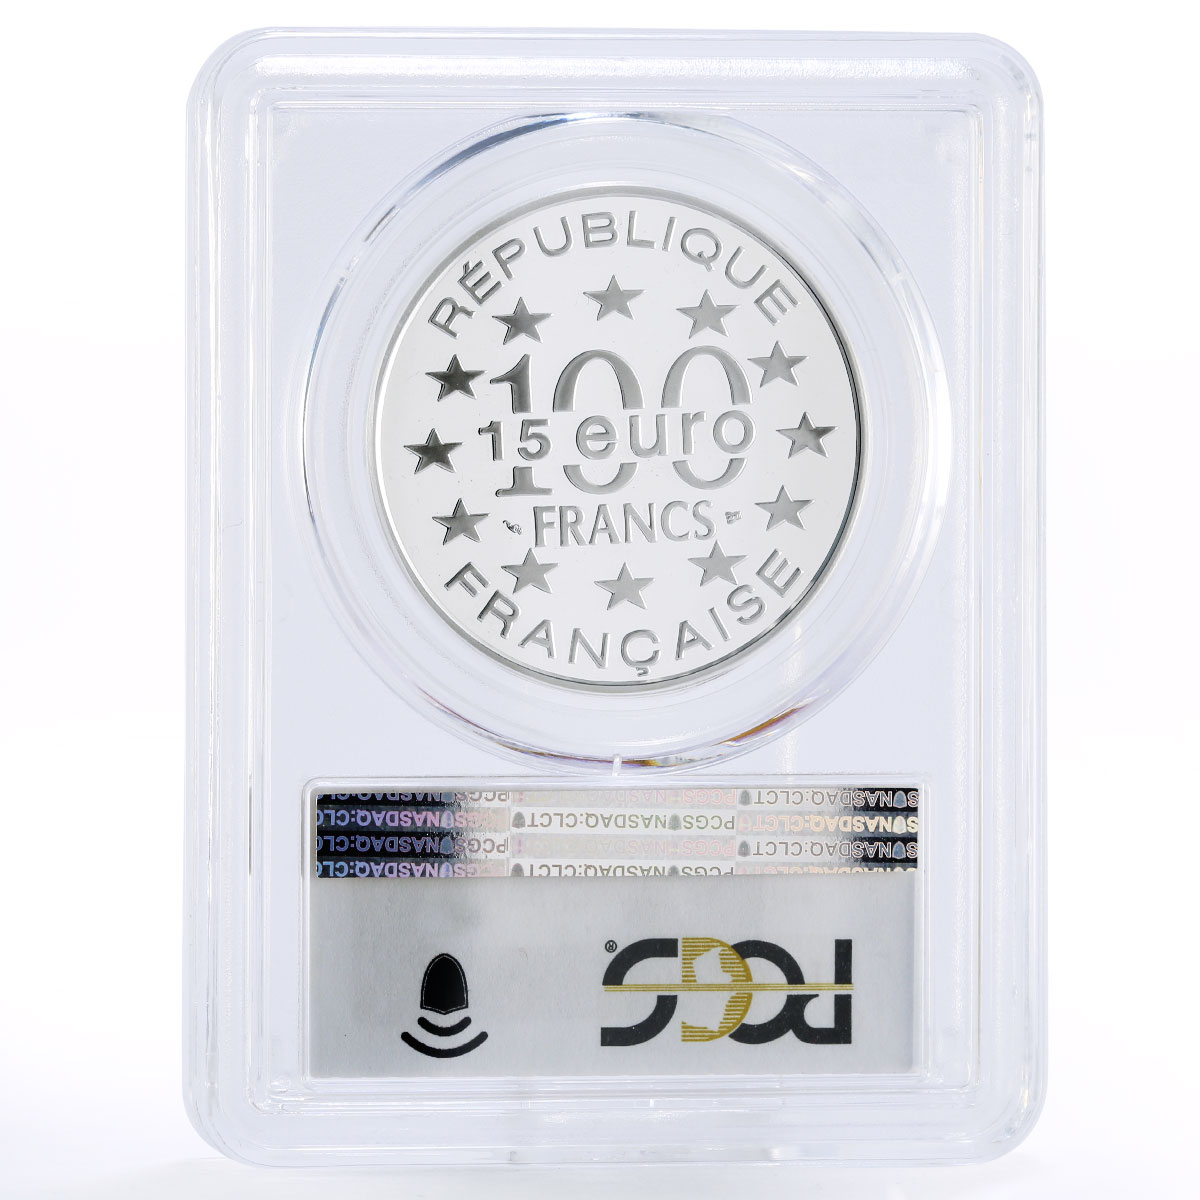 France 100 francs EU Heritage Grand Place Bruxelles PR69 PCGS silver coin 1996